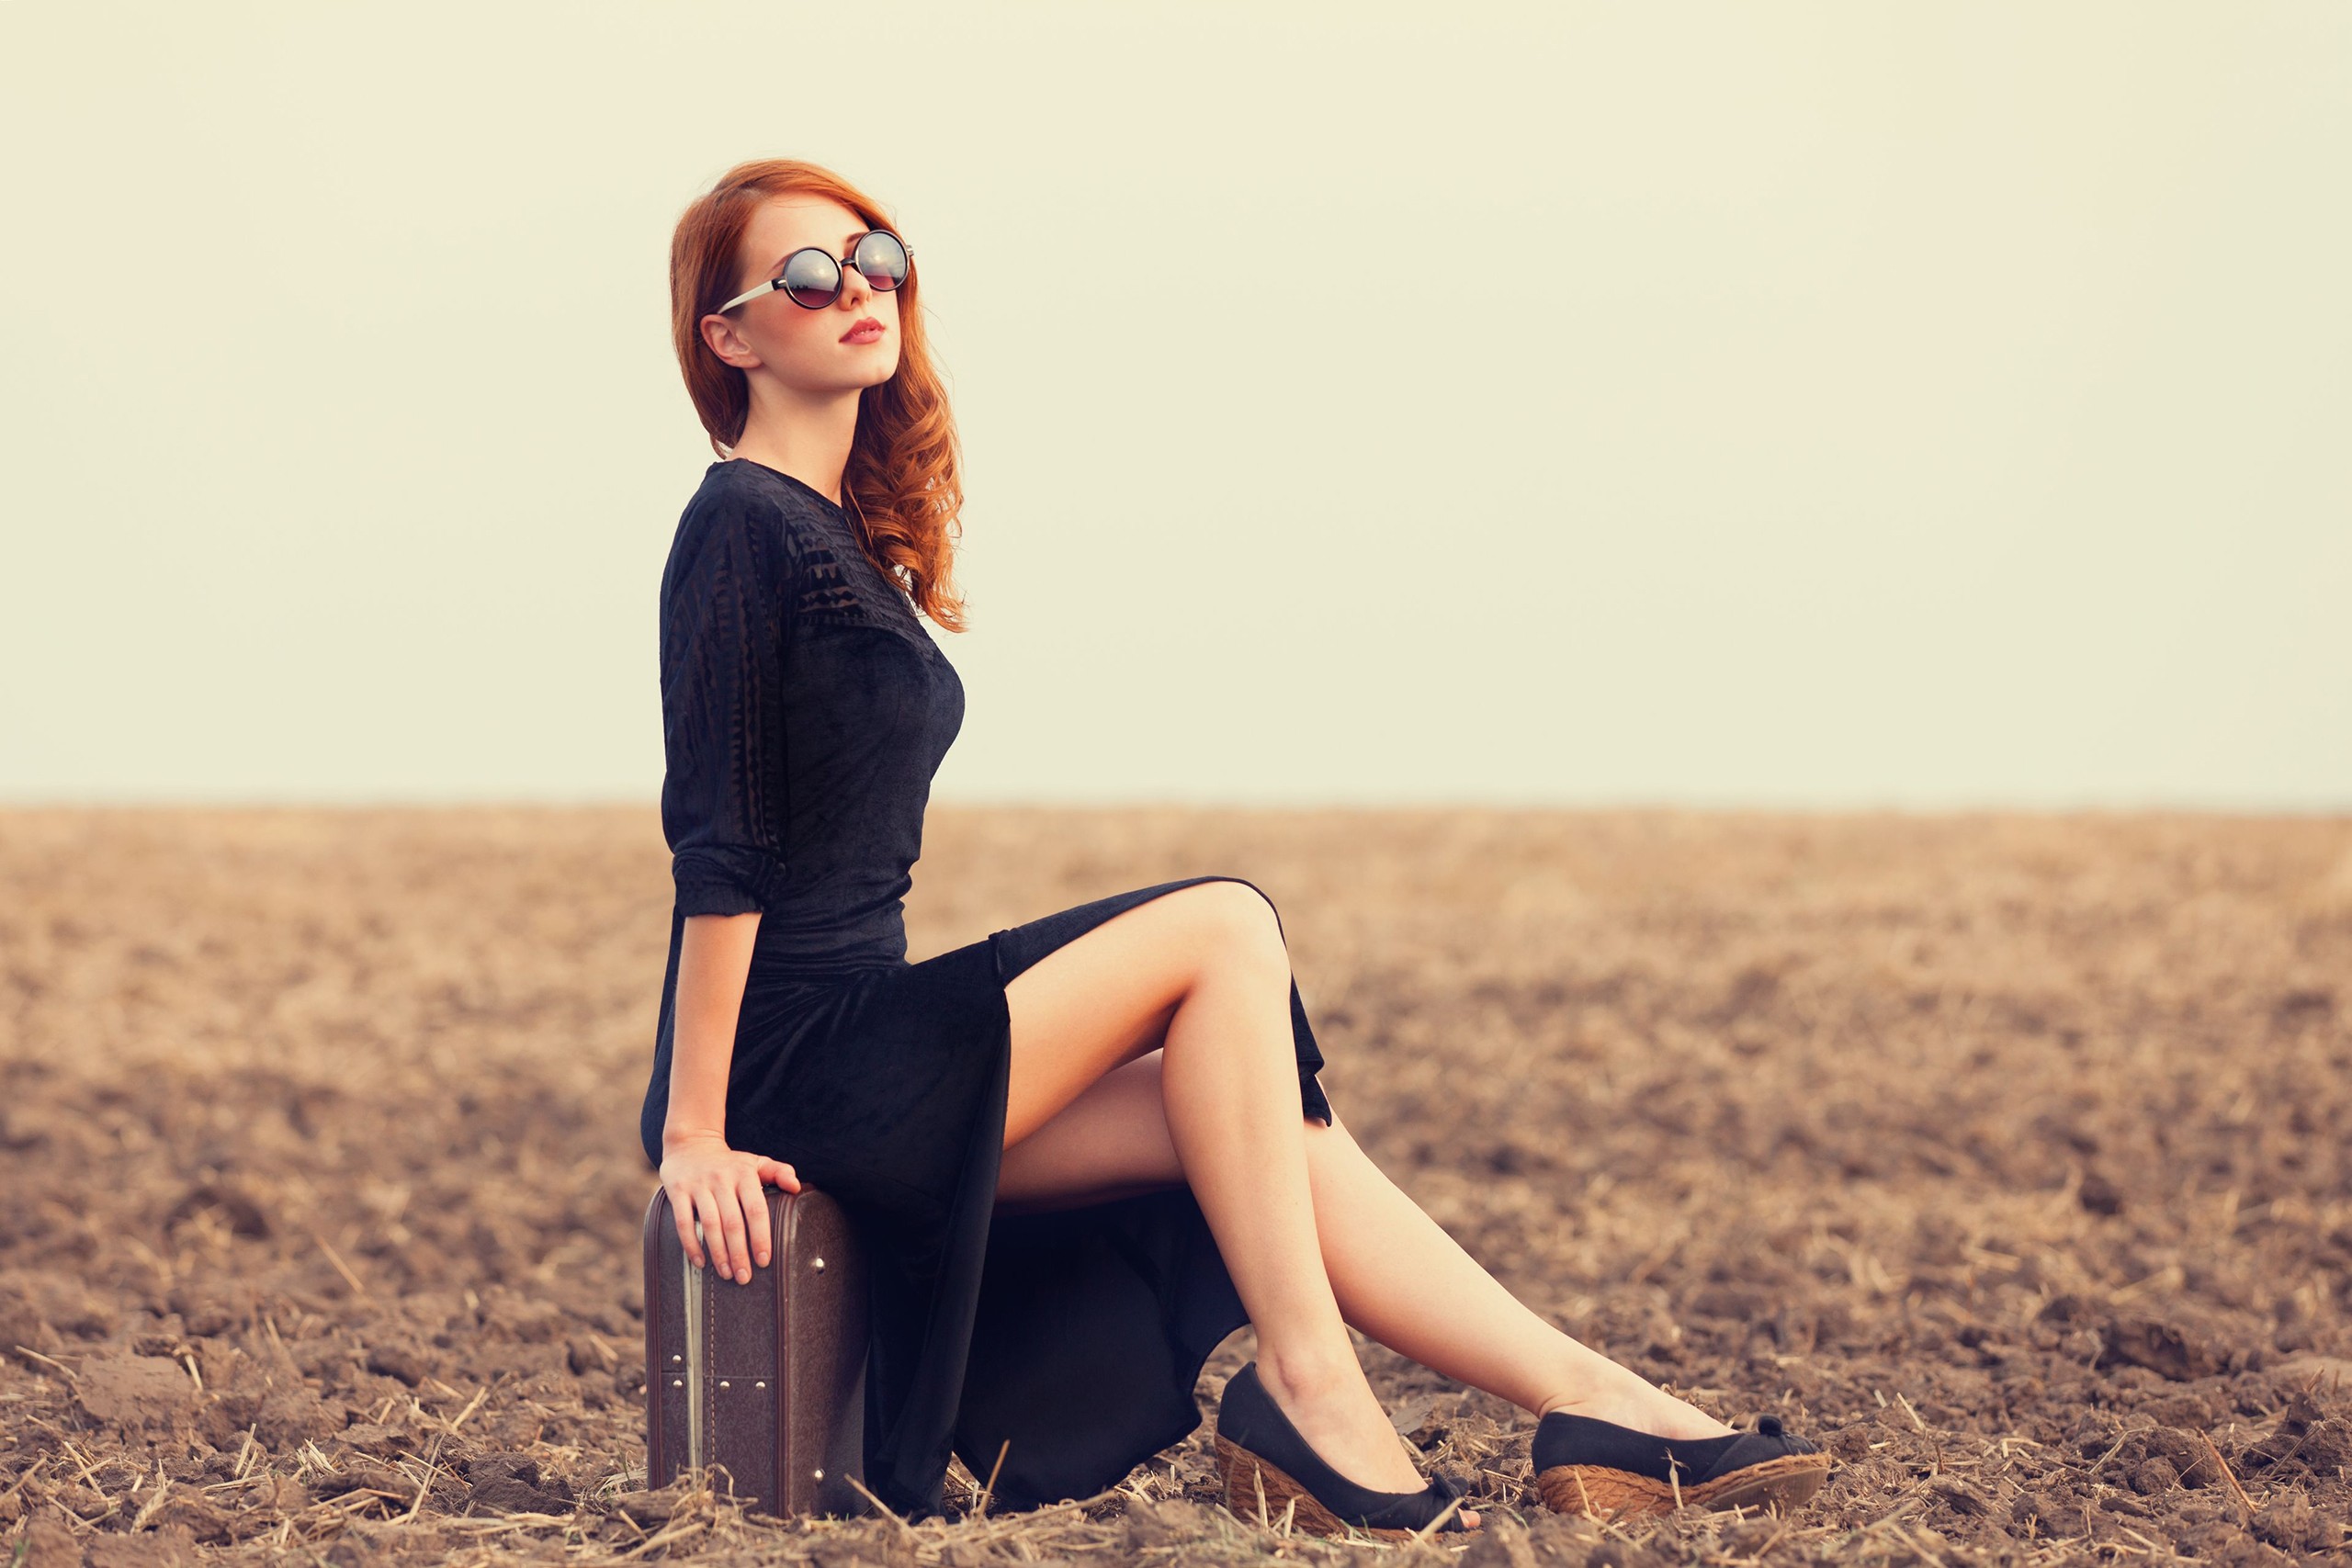 Women Redhead Women Outdoors Women With Shades Black Dress Suitcase Sitting High Cut Dress Legs Fash 2560x1707